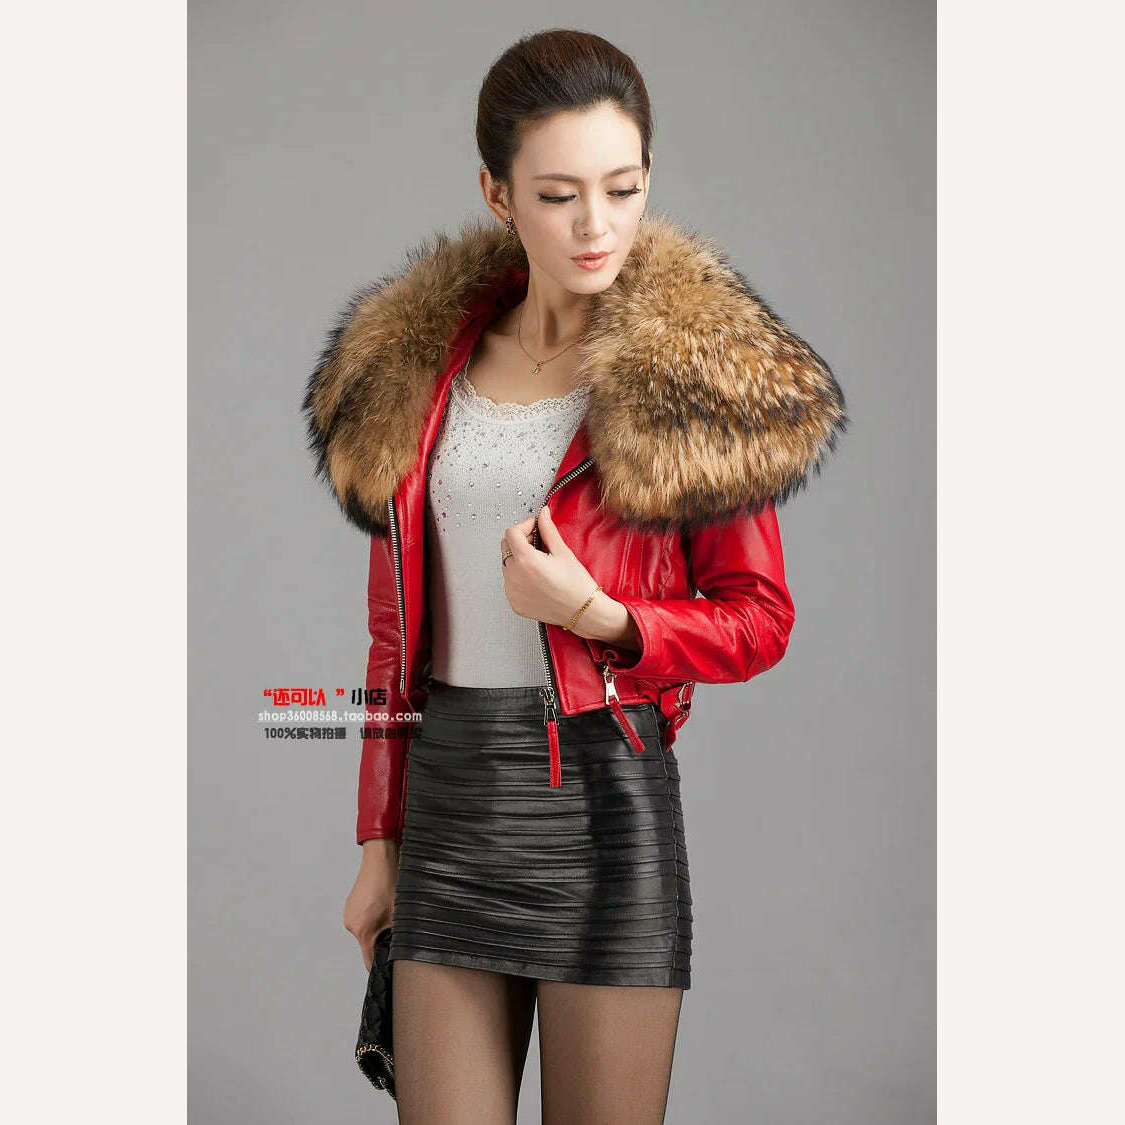 KIMLUD, Autumn Winter Women Genuine Sheepskin Leather Jacket Real Leather Coat with Ultra Large Raccoon Fur Collar Fashion Streetwear, KIMLUD Women's Clothes